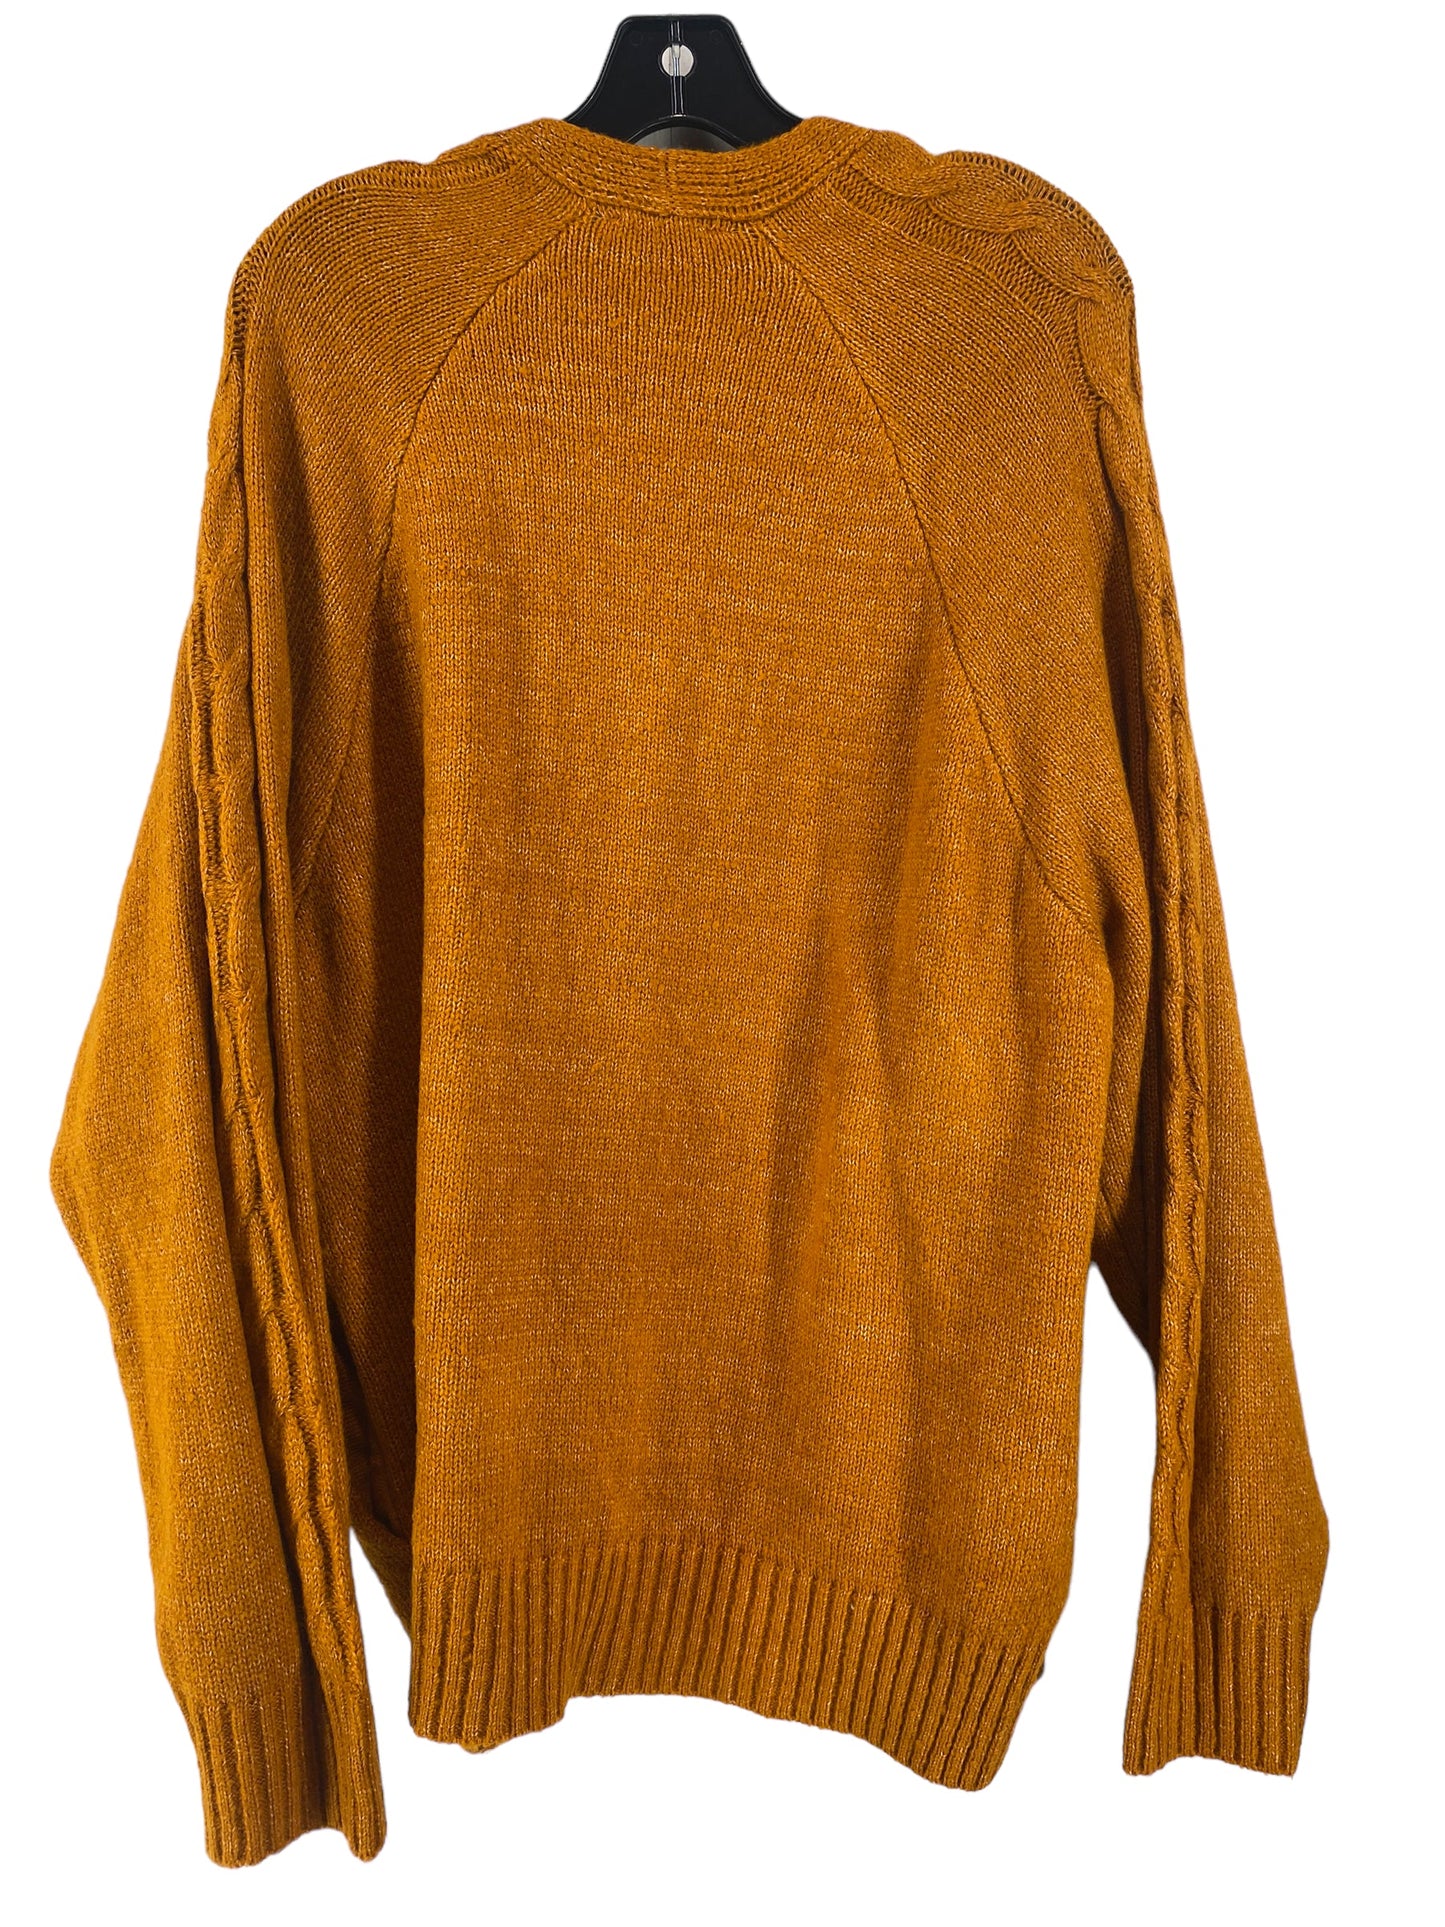 Sweater Cardigan By Double Zero  Size: M